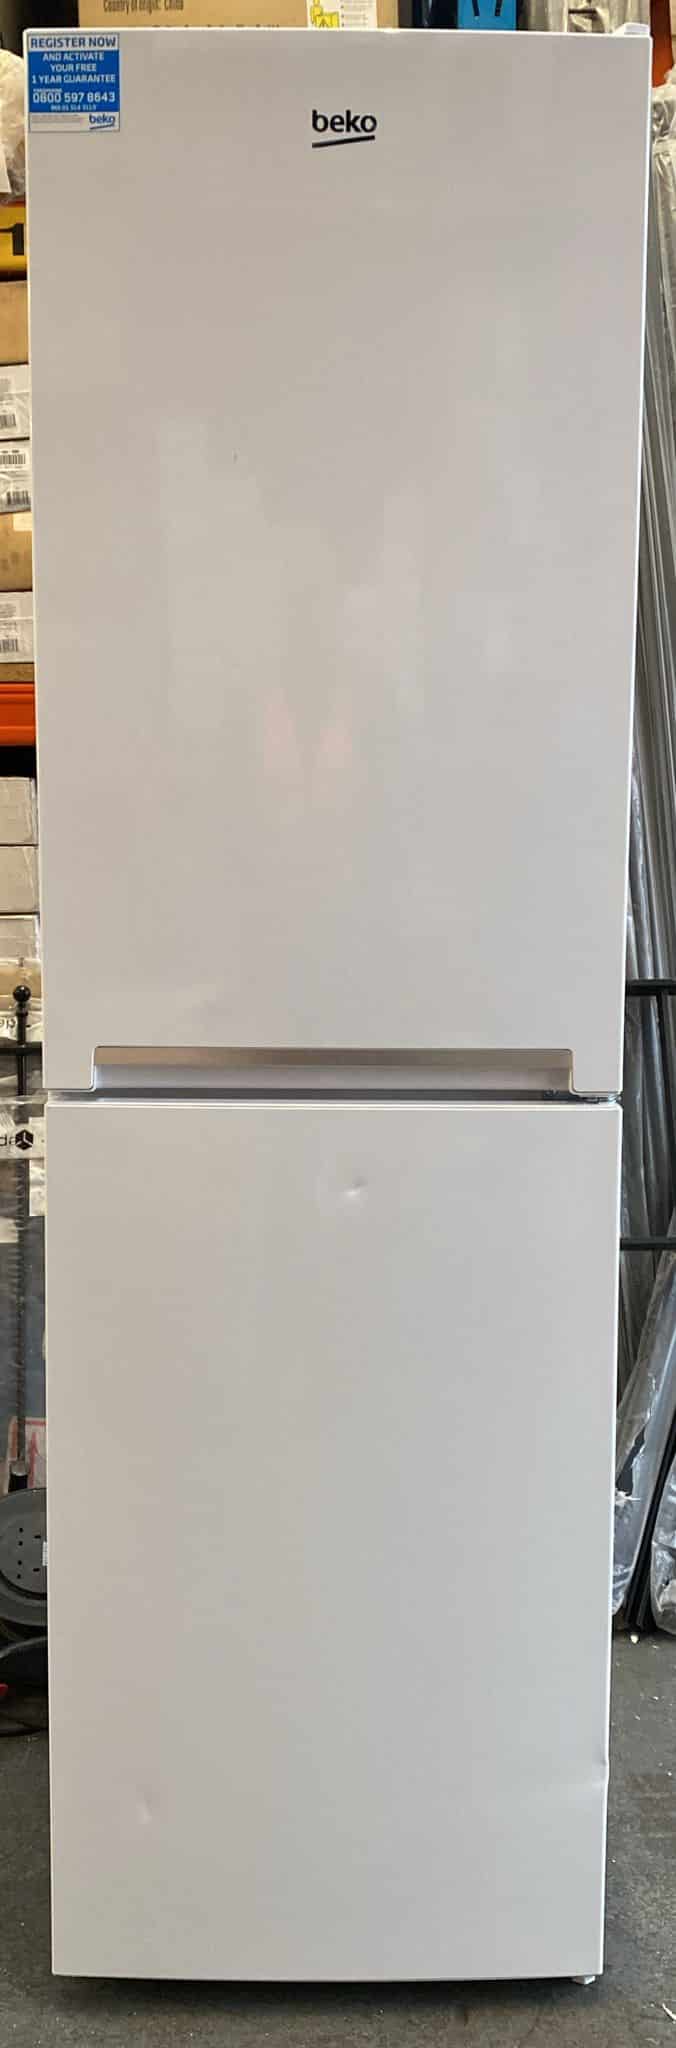 Beko-Fridge Freezer-50/50 Freestanding Frost Free- CFG3582W-9499